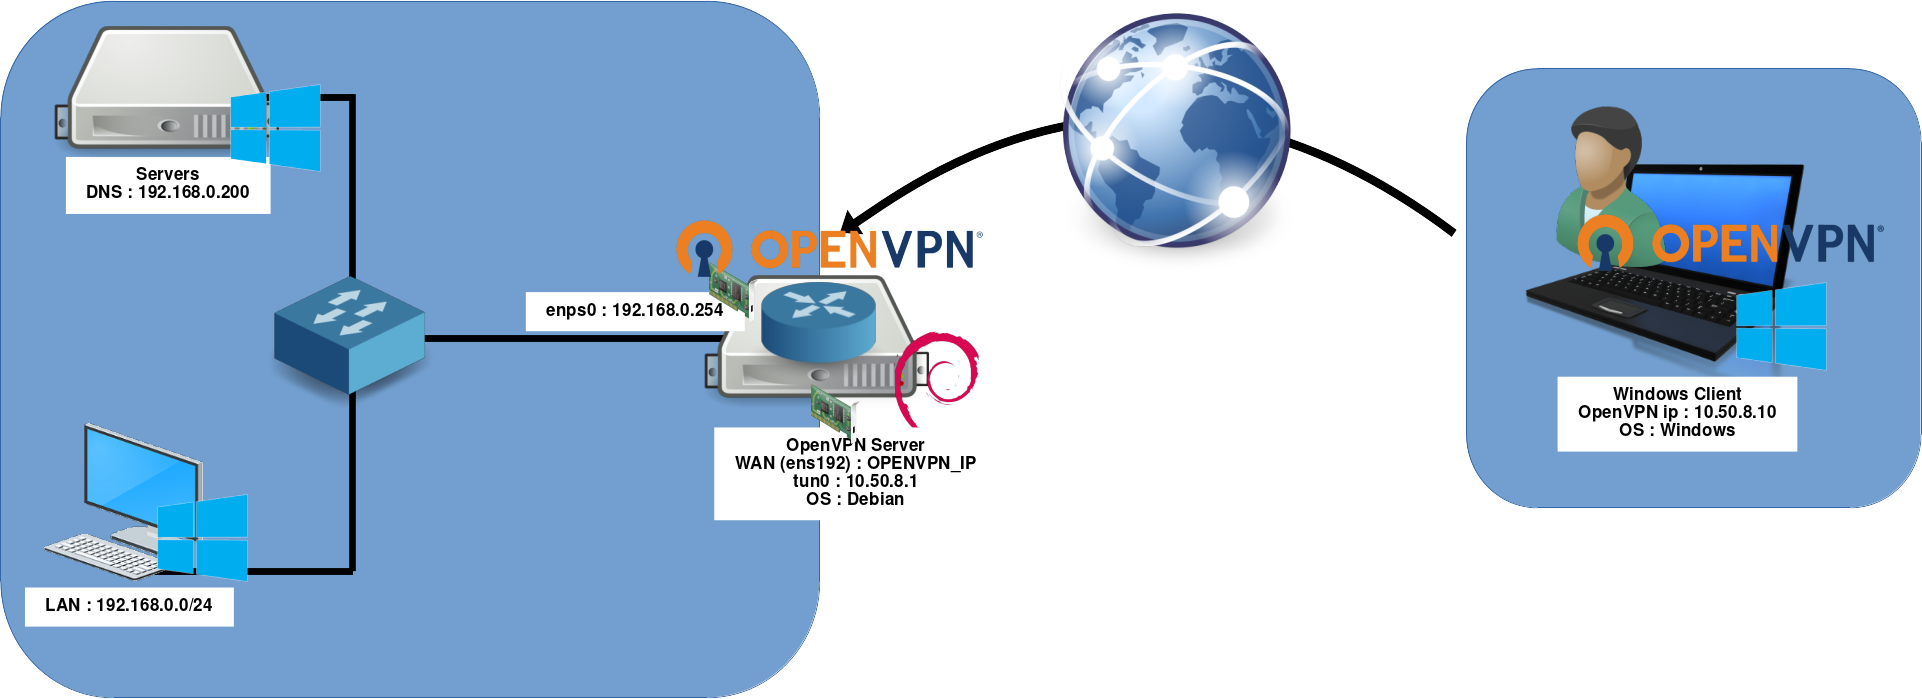 OpenVPN windows client/debian server architecture